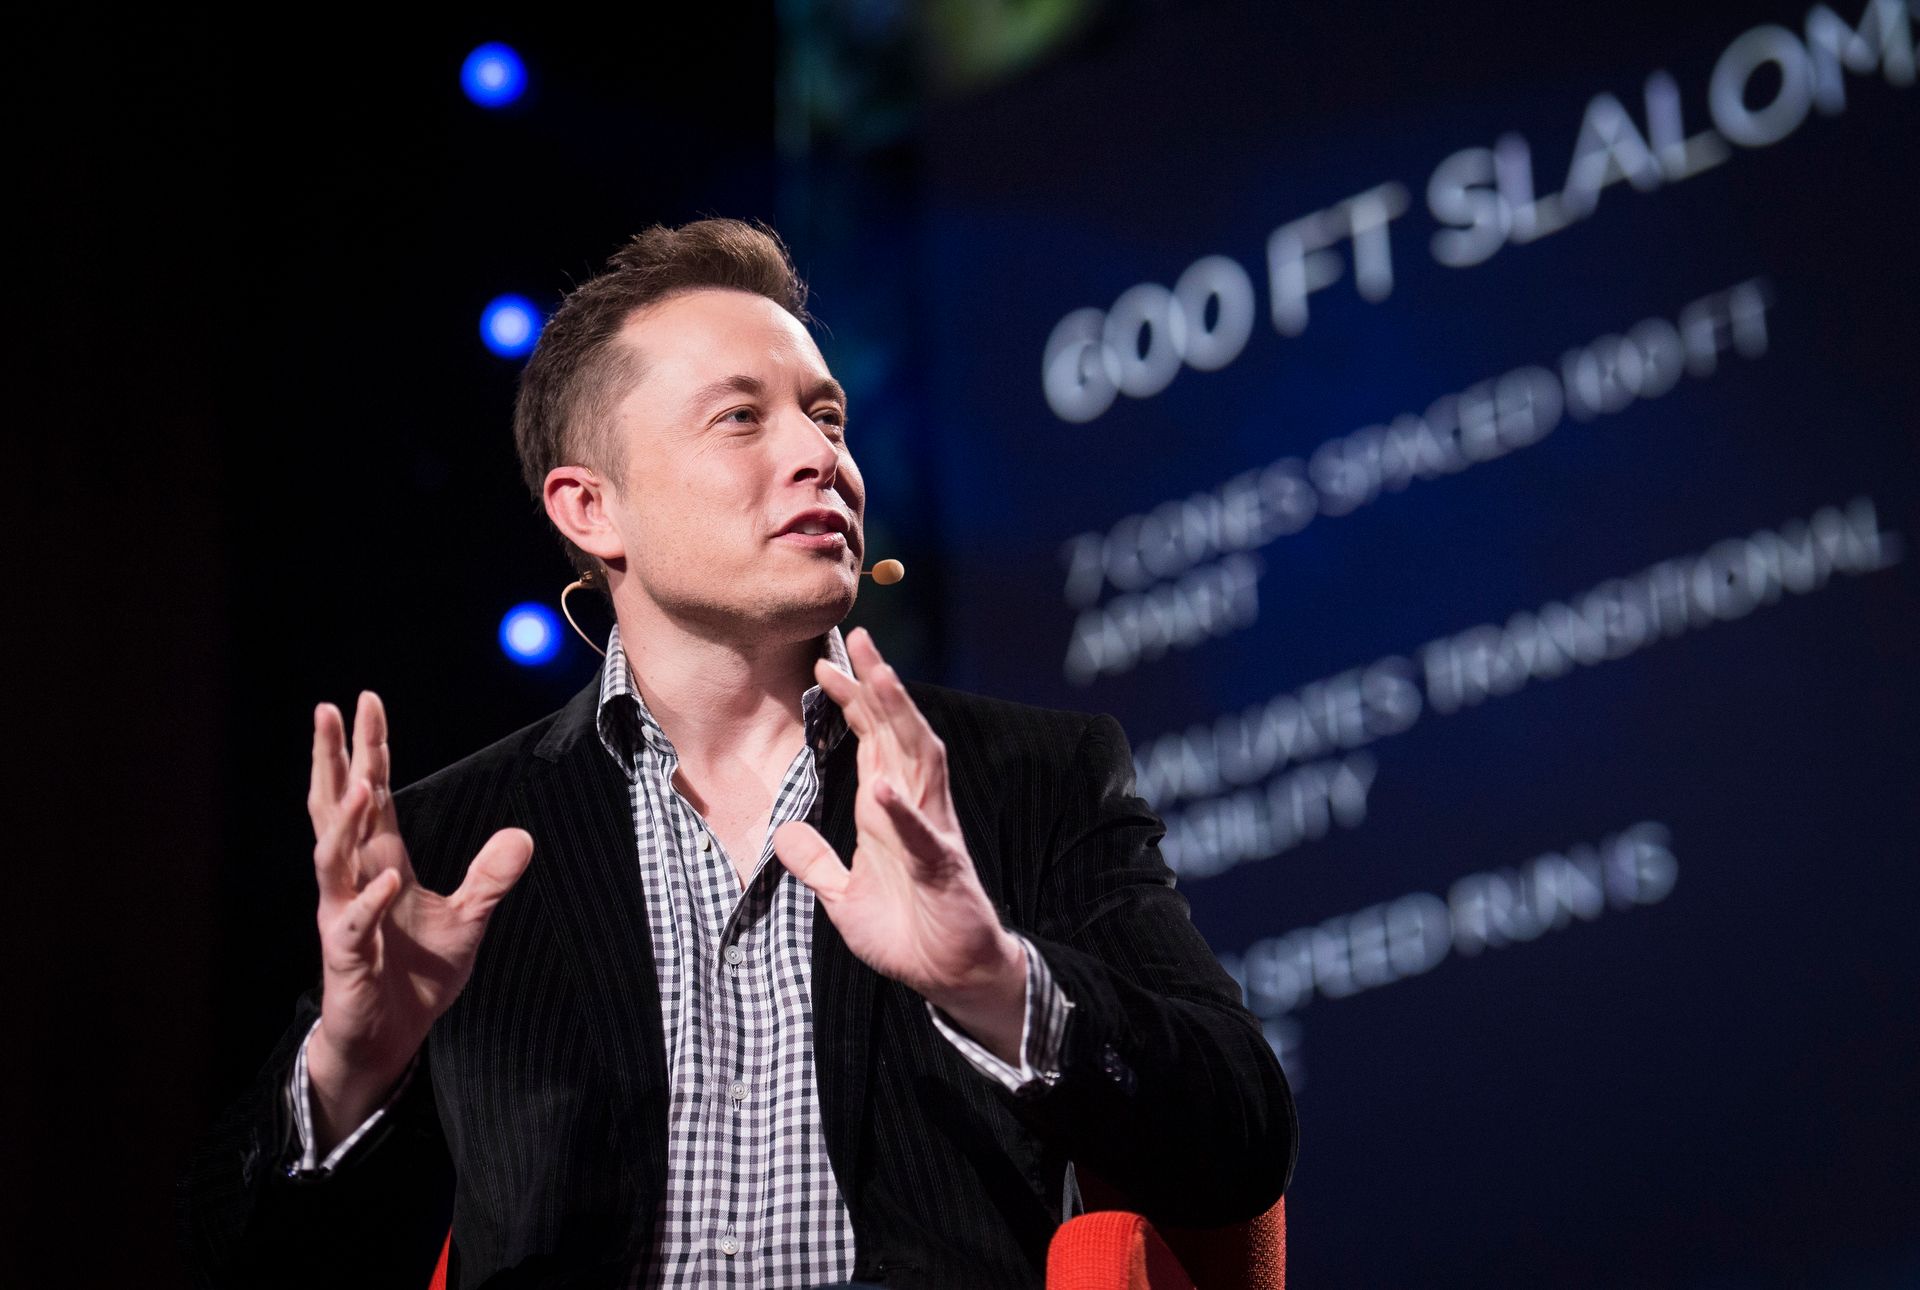 🏆 XPRIZE is the host for Elon Musk's 100 million gigaton carbon